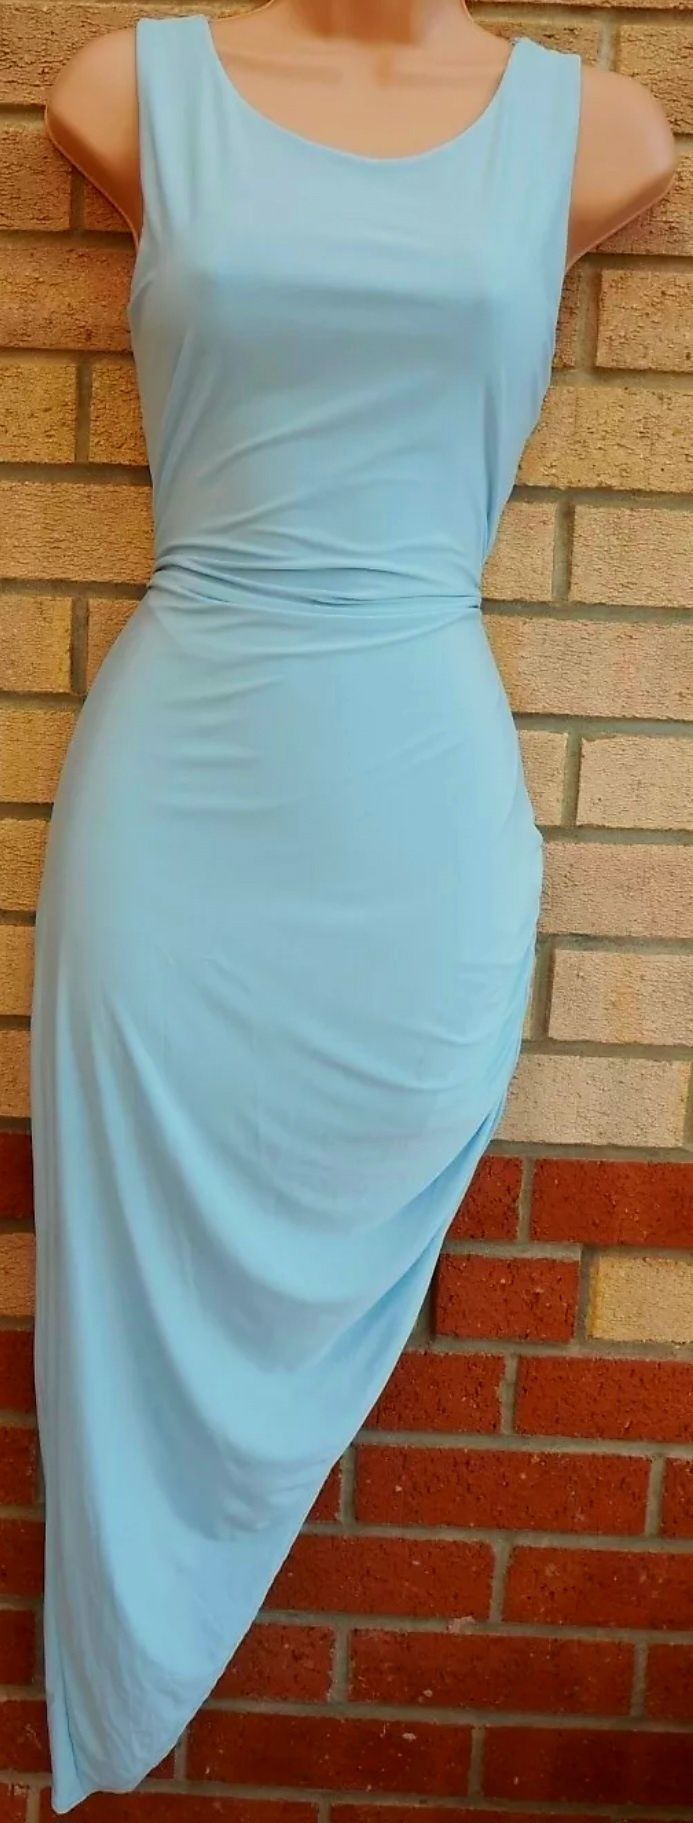 Niebieska sukienka rozmiar 38